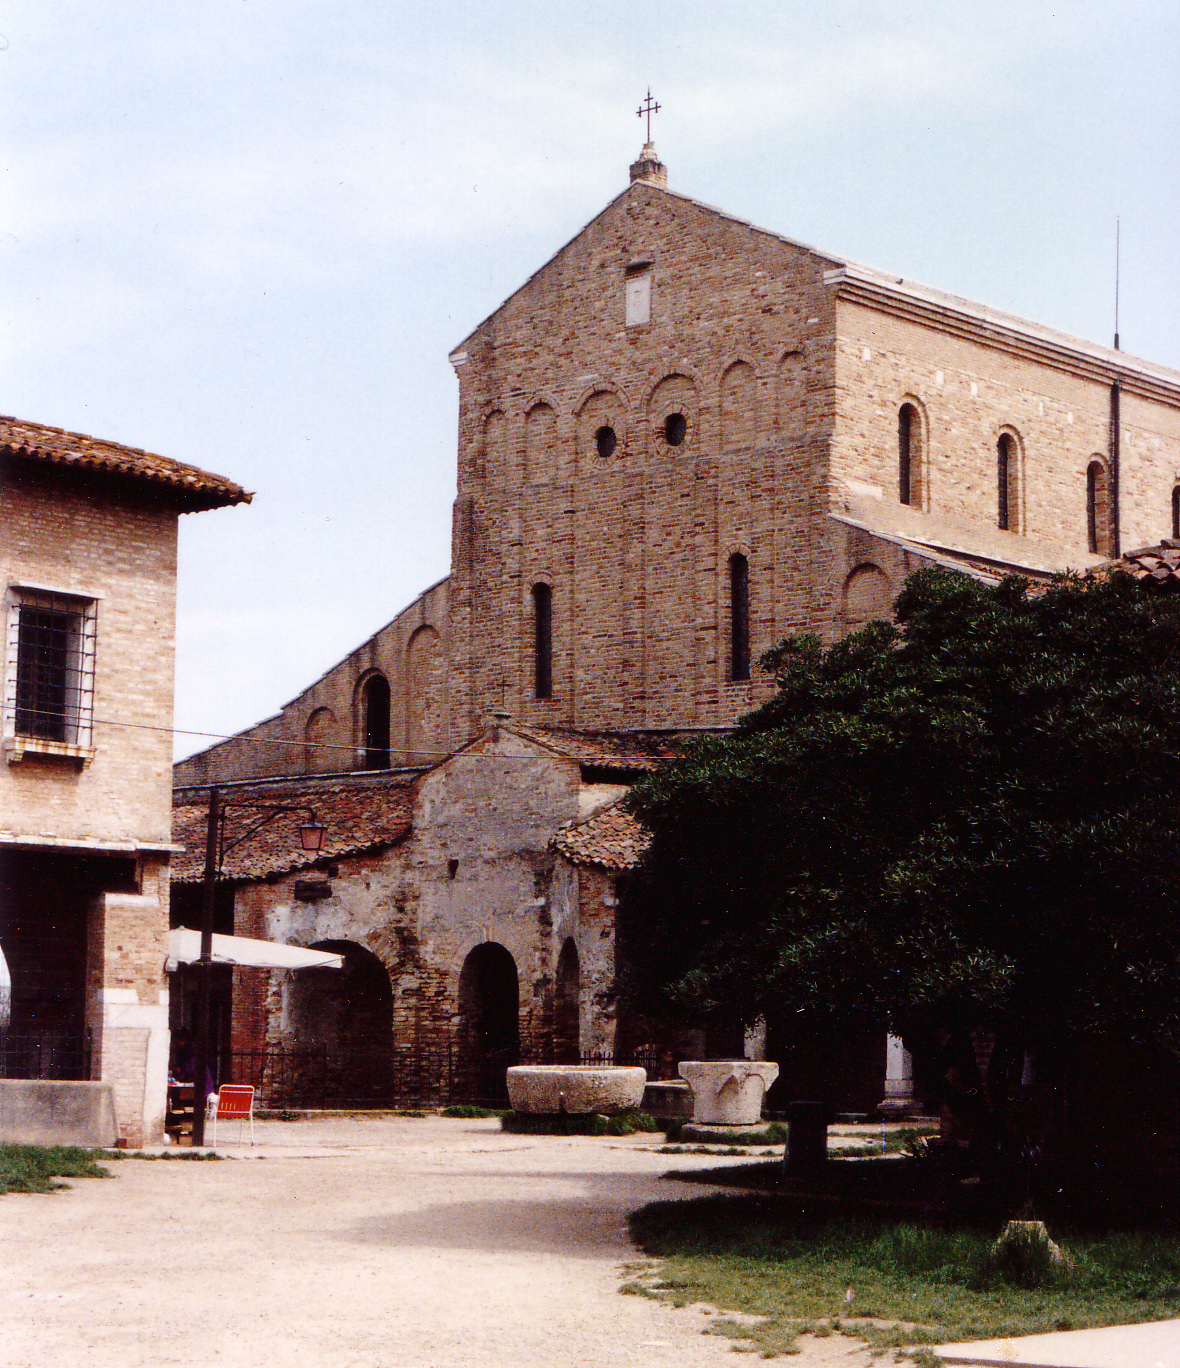 Torcello, Duomo, Santa Maria Assunta, from south west